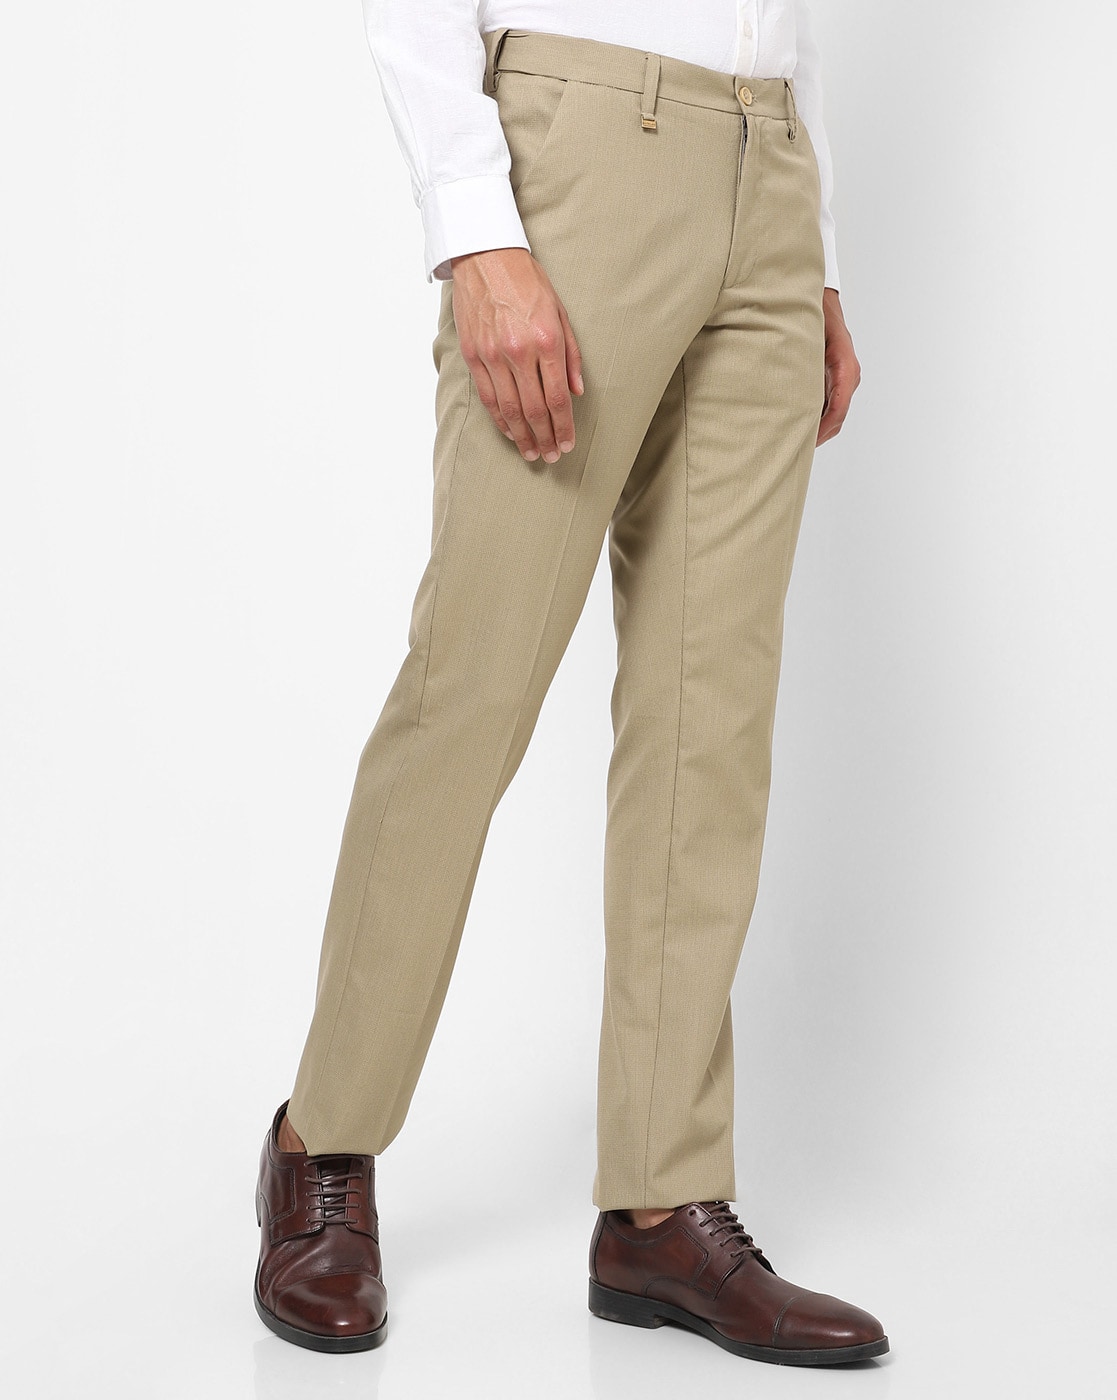 Buy Black Trousers  Pants for Men by NETPLAY Online  Ajiocom